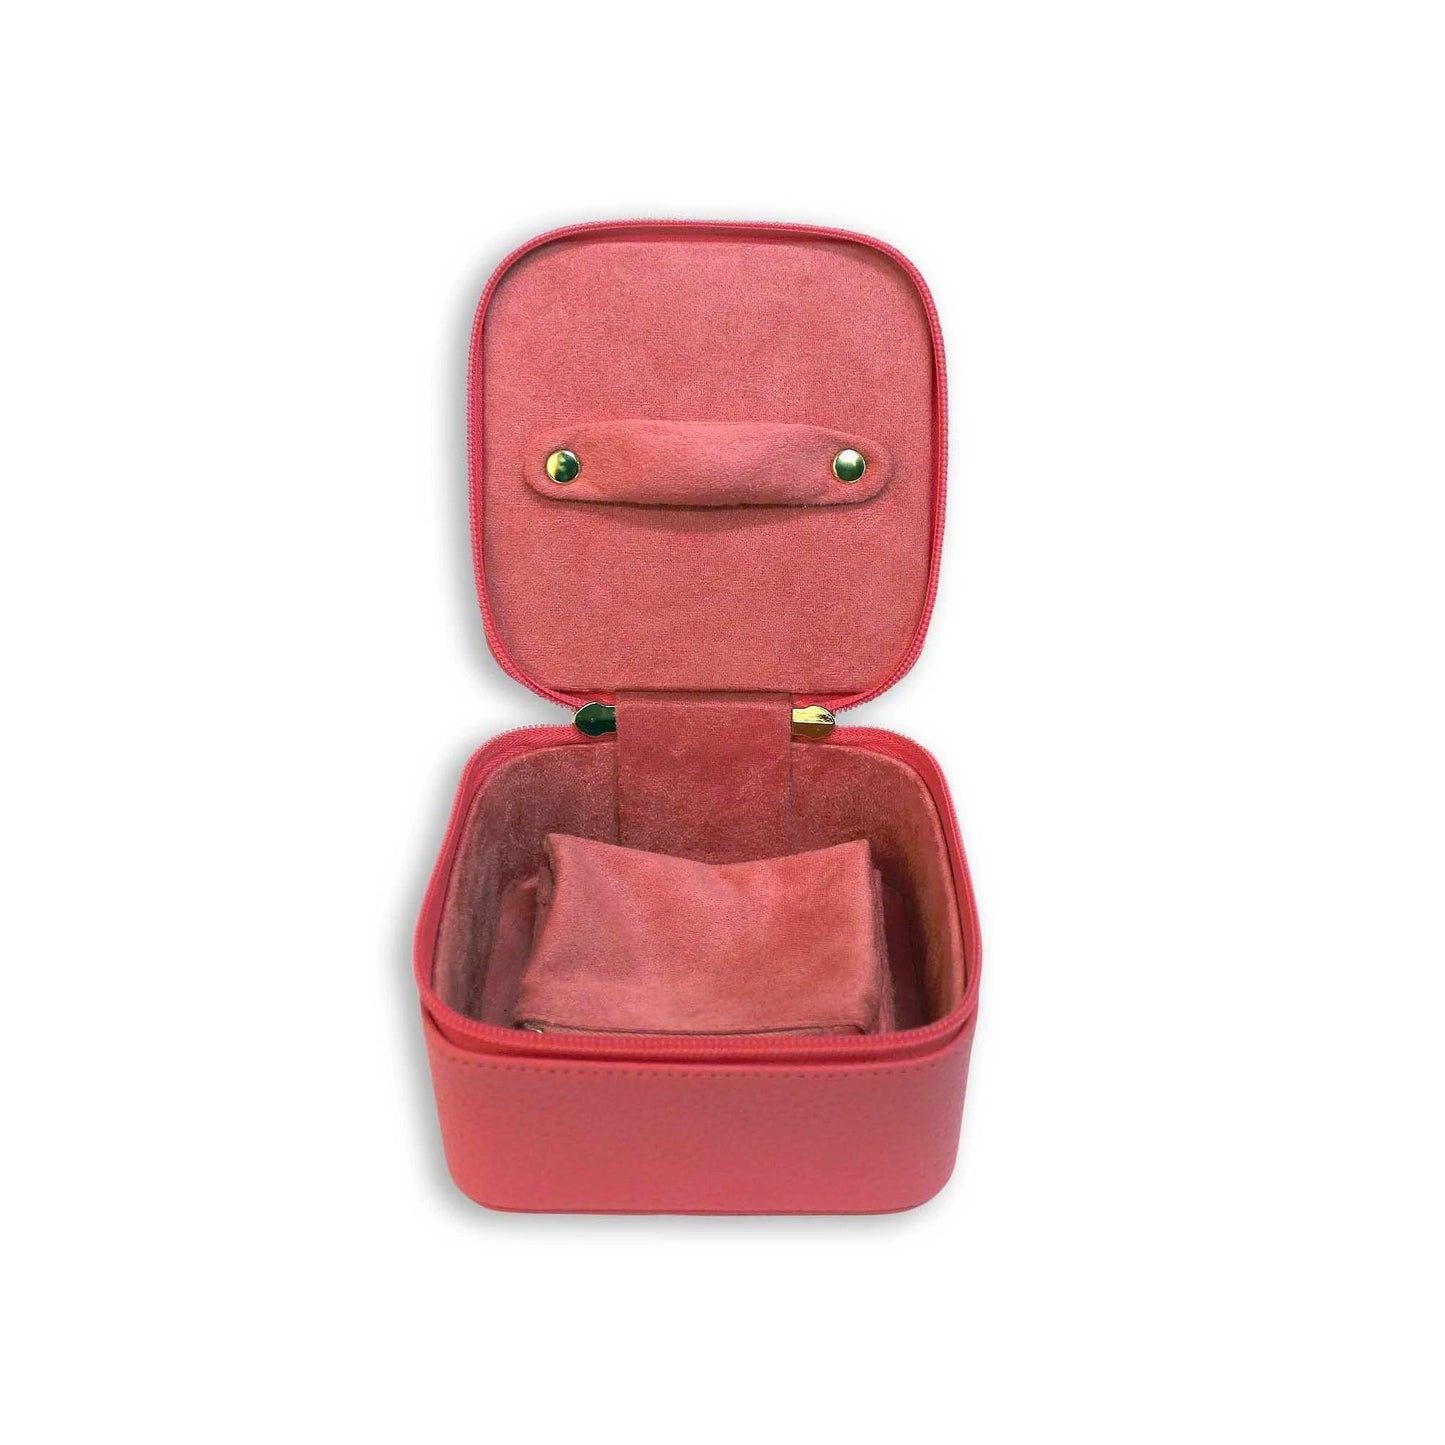 GIFT Luxe Pop Jewelry Cube in Watermelon